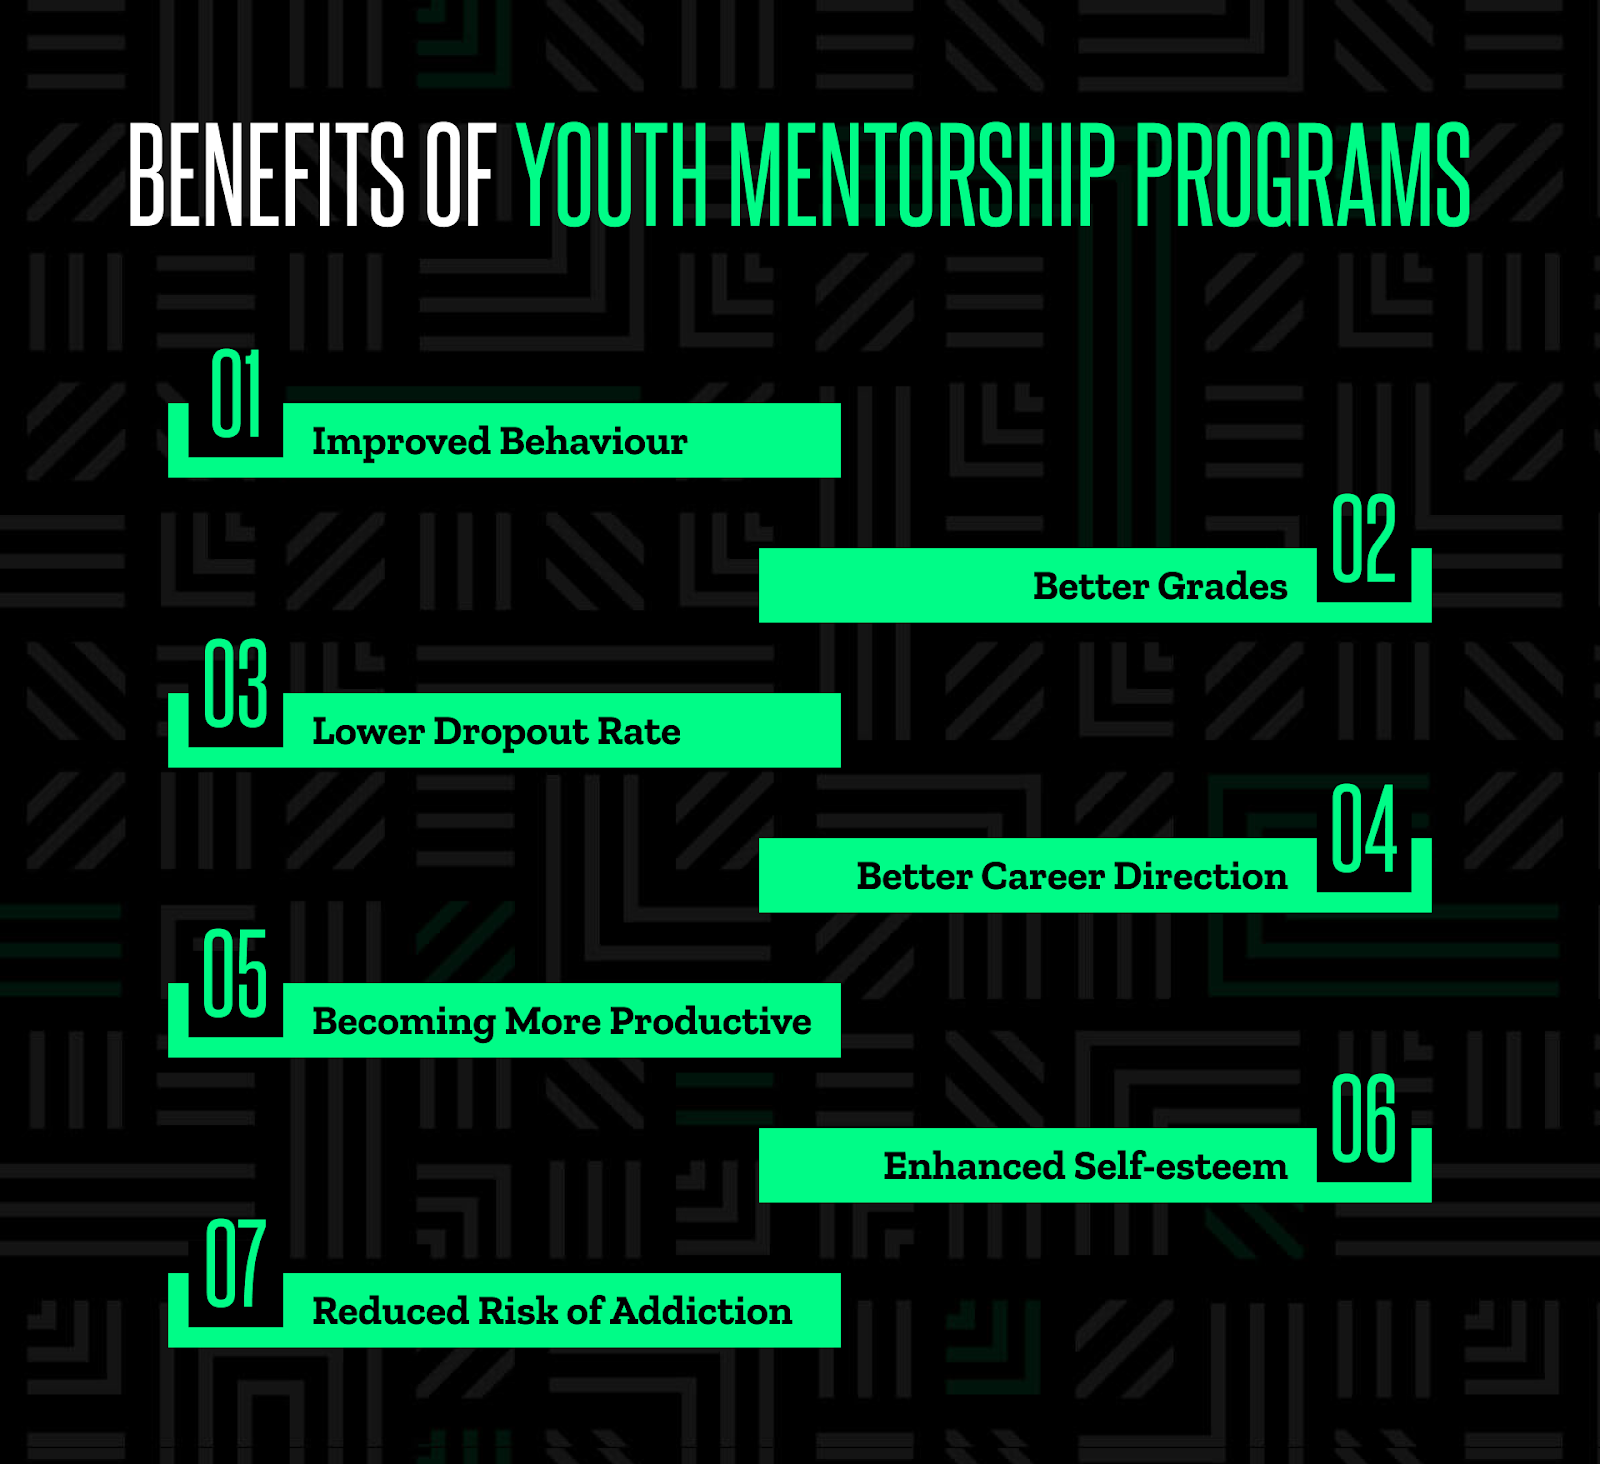 Benefits of Youth Mentorship Programs 